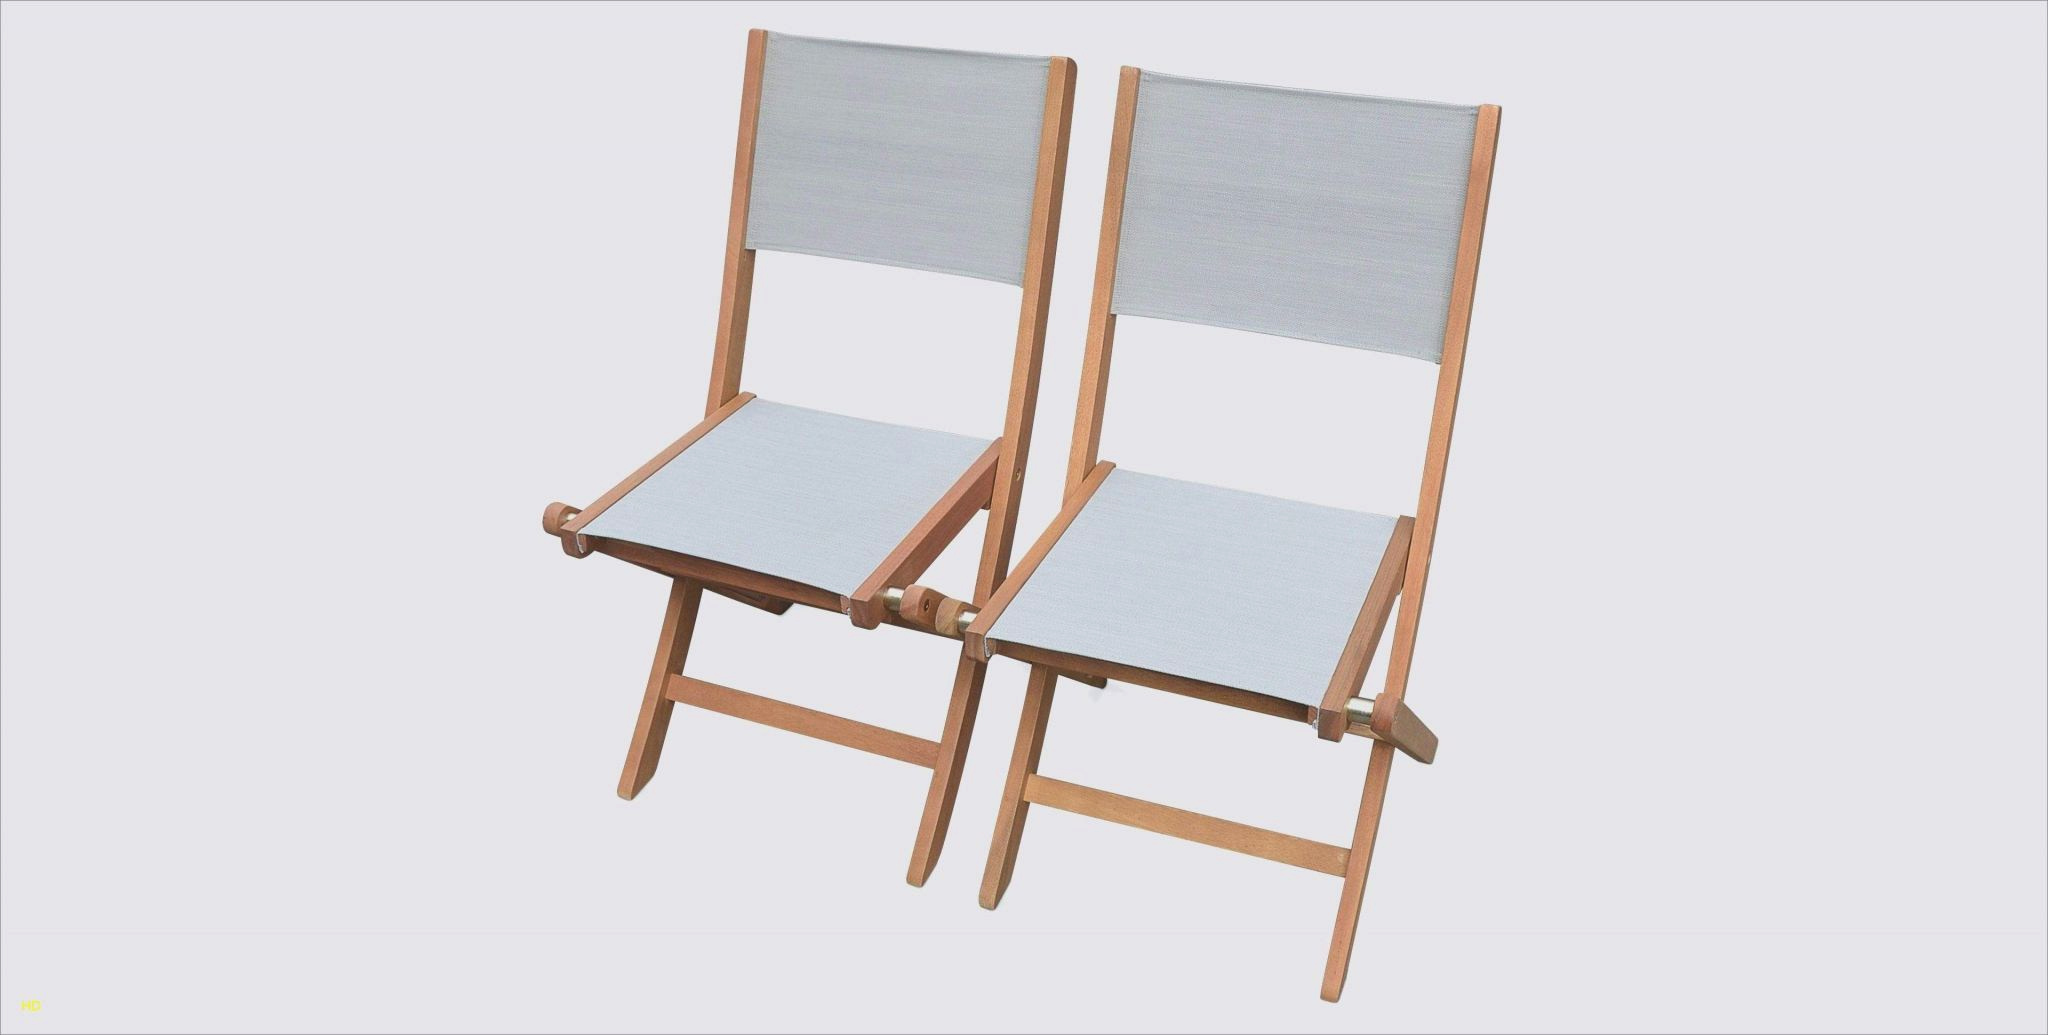 chaise de jardin pliante blanche elegant fauteuil de jardin en bois blanc avec table de jardin avec rallonge of chaise de jardin pliante blanche